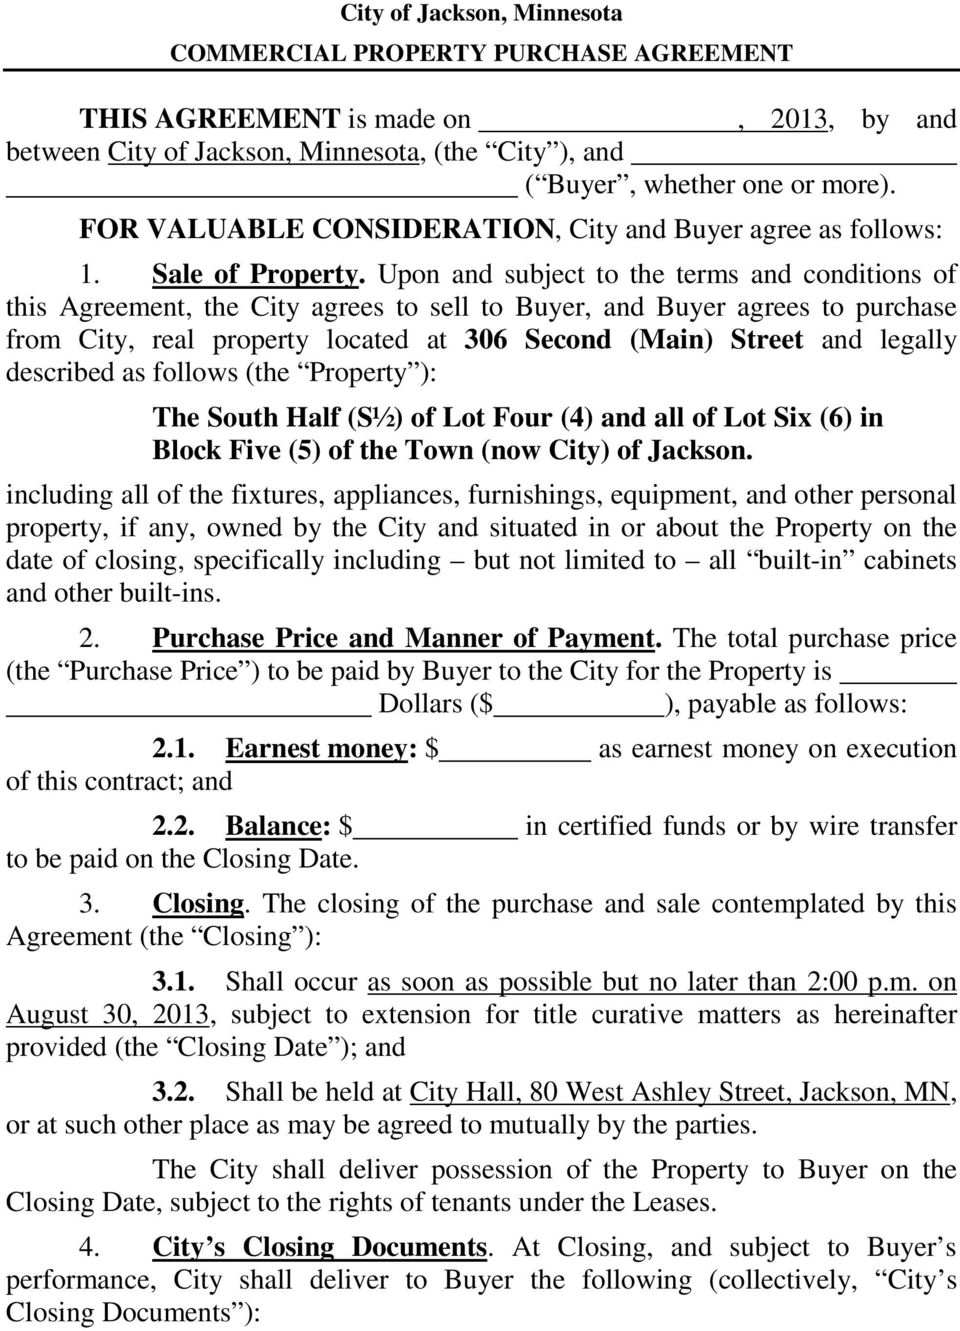 Minnesota Purchase Agreement City Of Jackson Minnesota Commercial Property Purchase Agreement Pdf